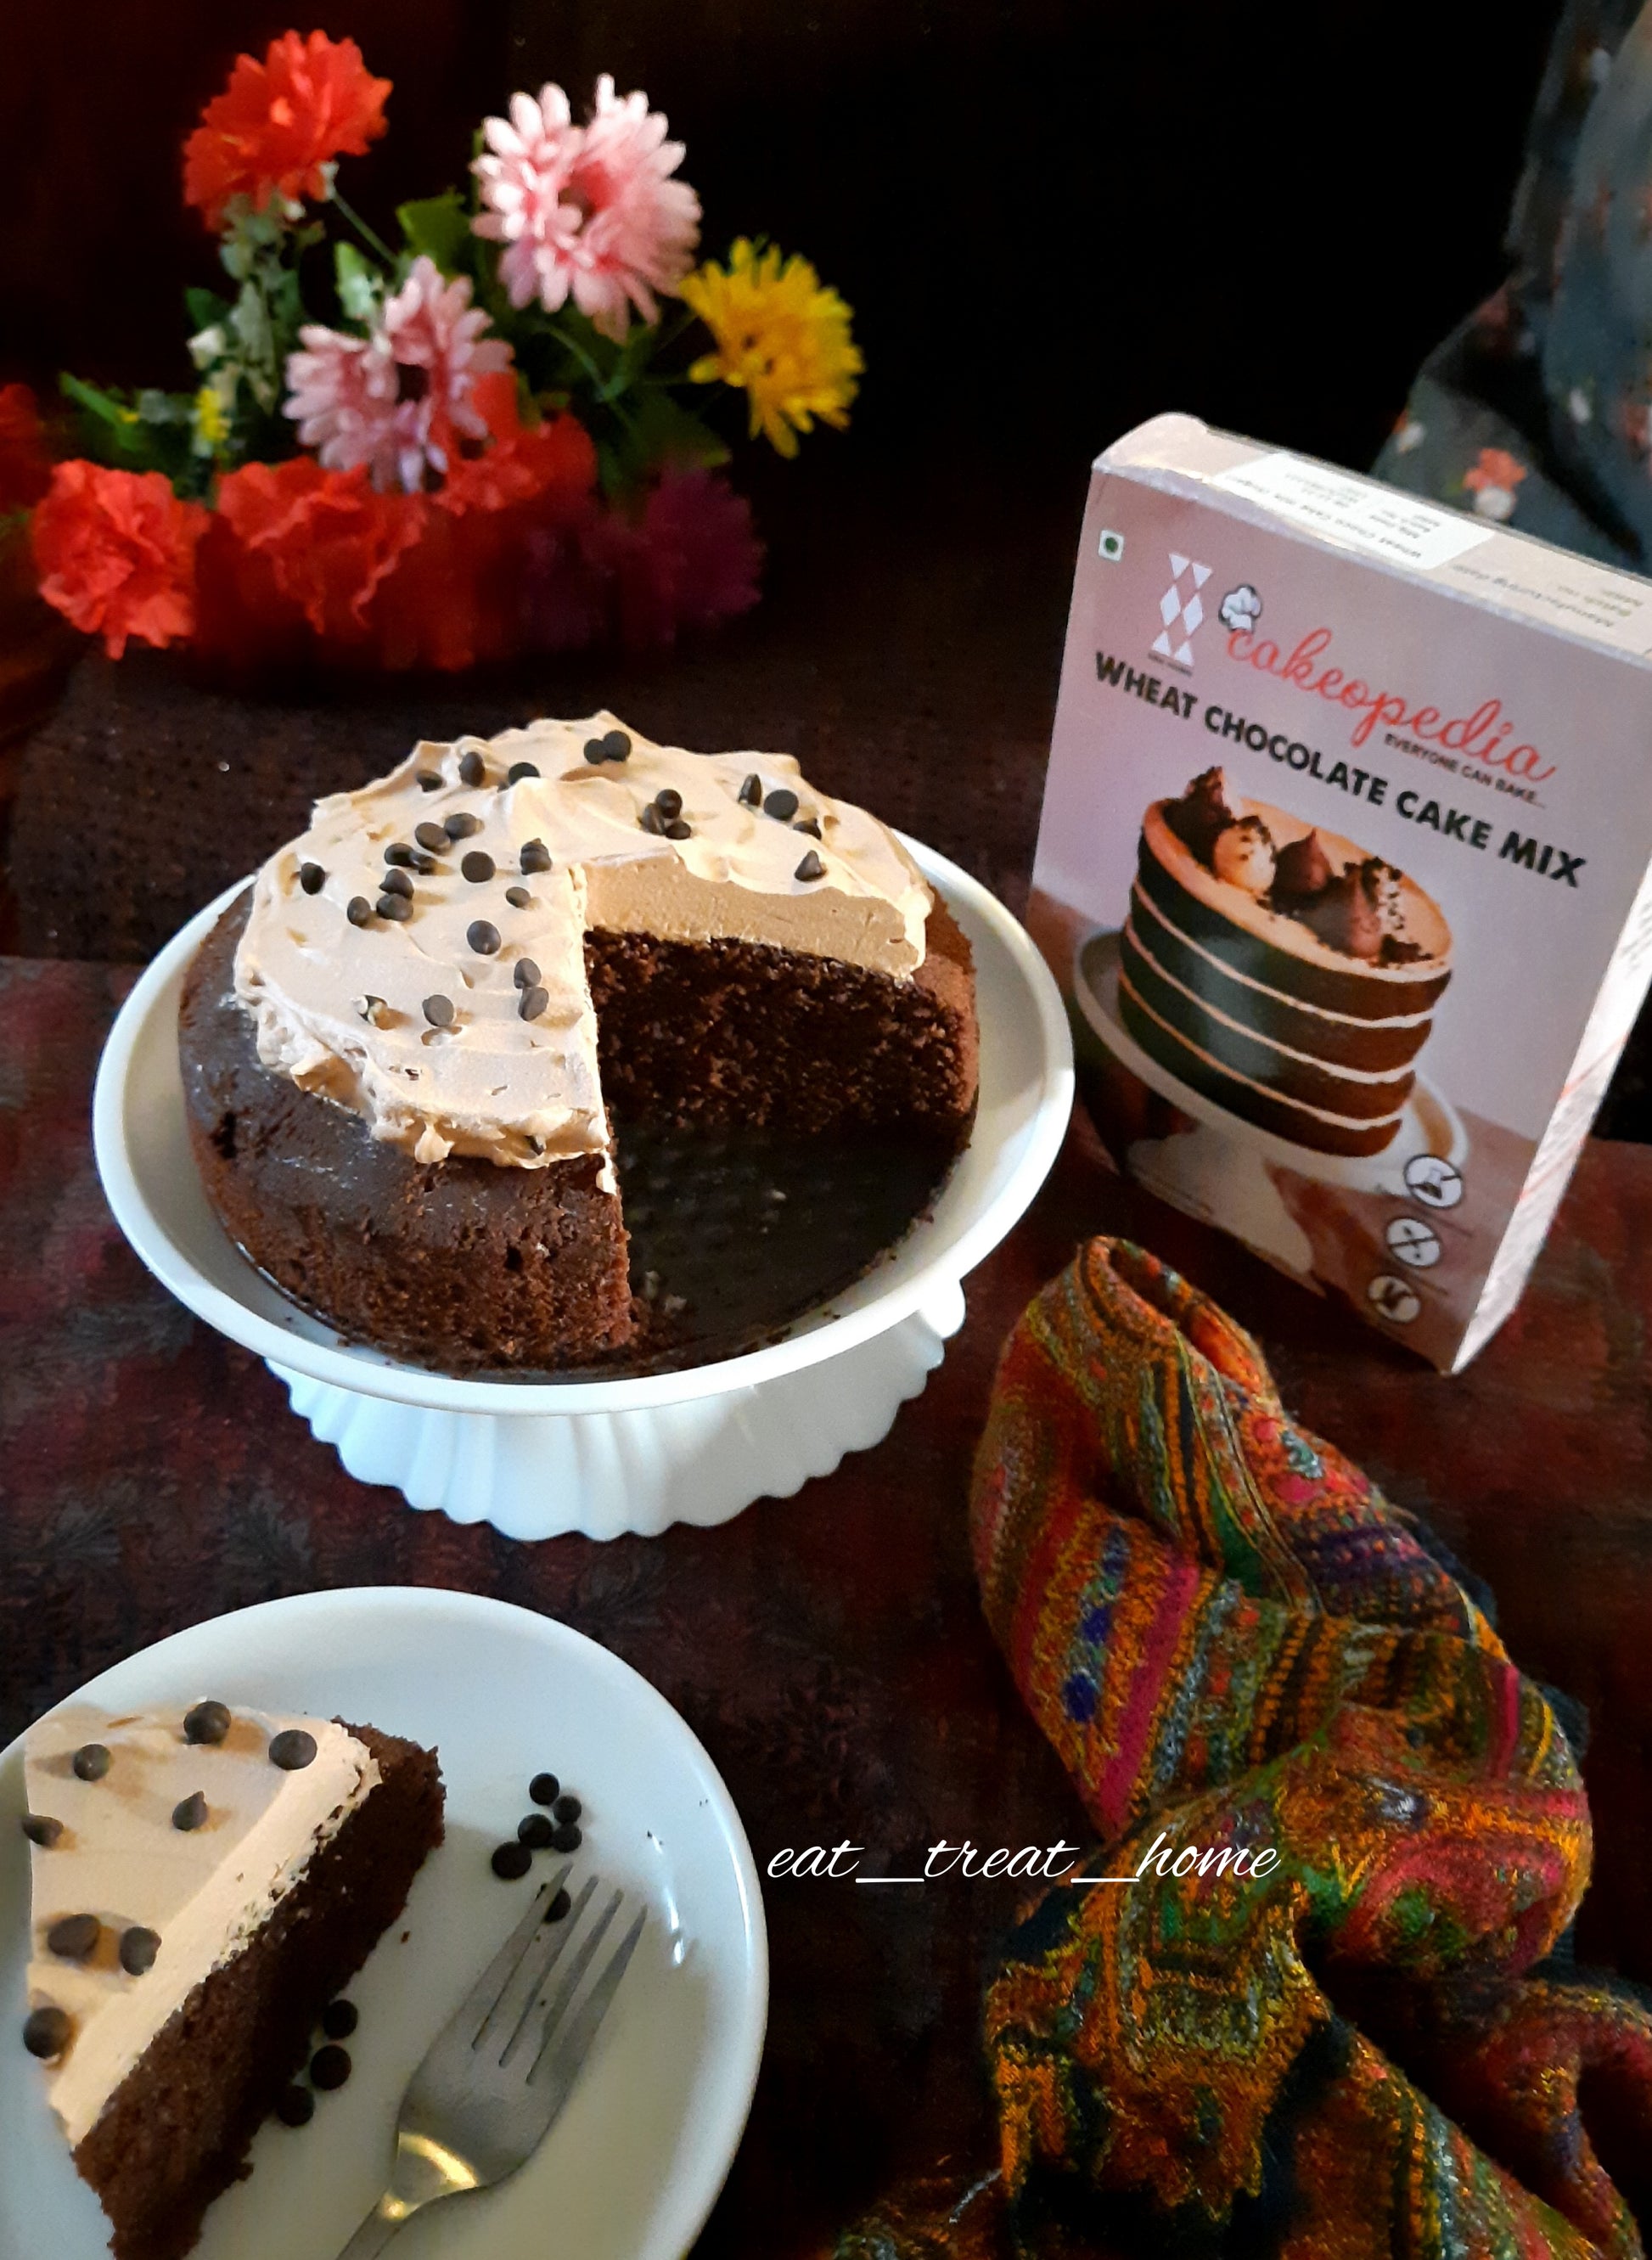 cake frosting, brownie cake mix, chocolate cake